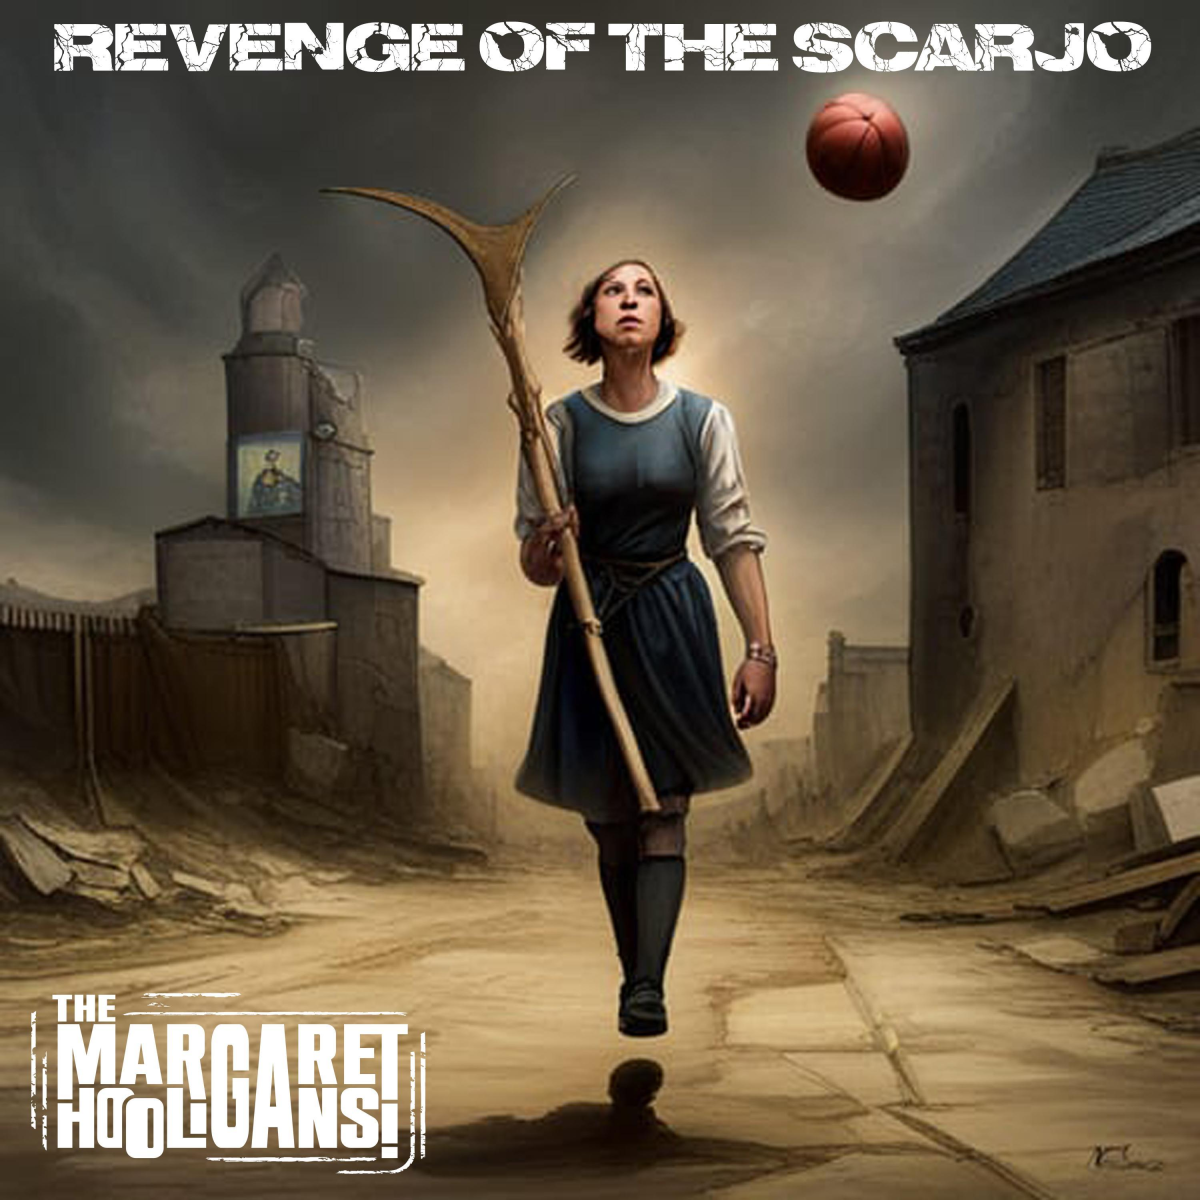 The Margaret Hooligans – “Revenge of the ScarJo”